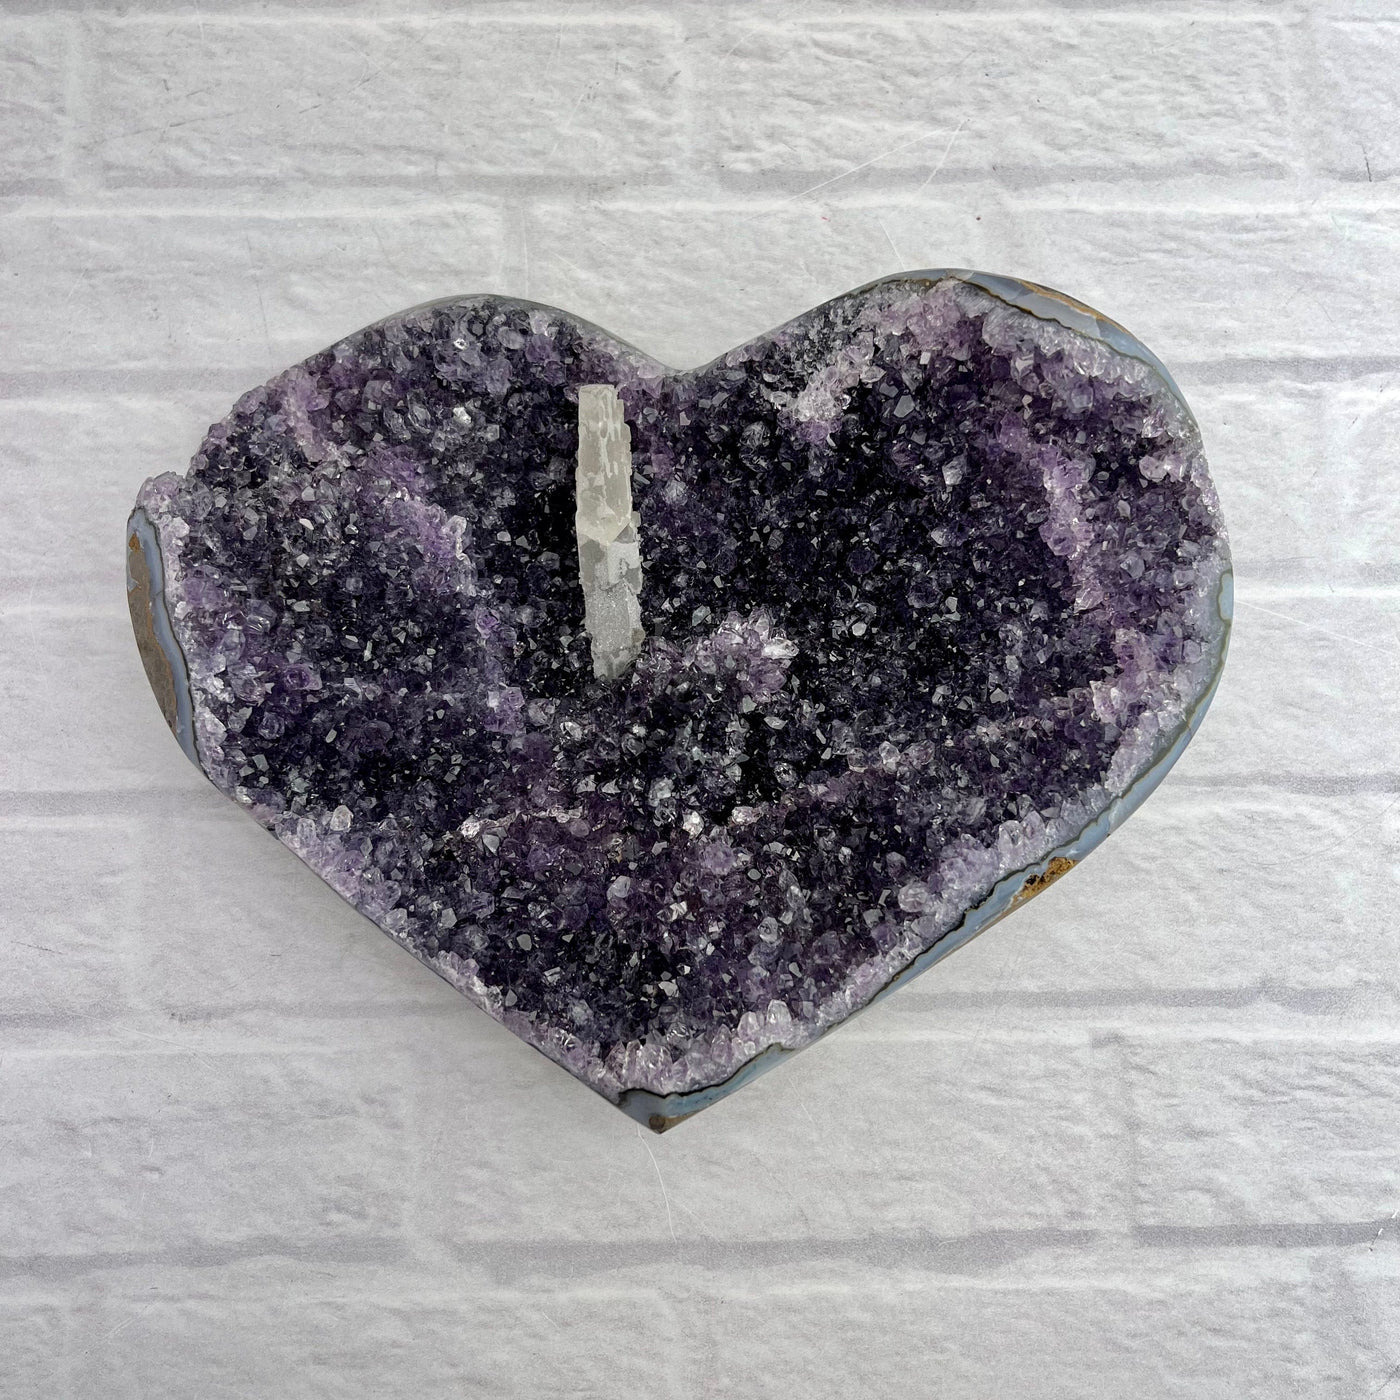  Amethyst Purple Cluster Druzy Heart Top view